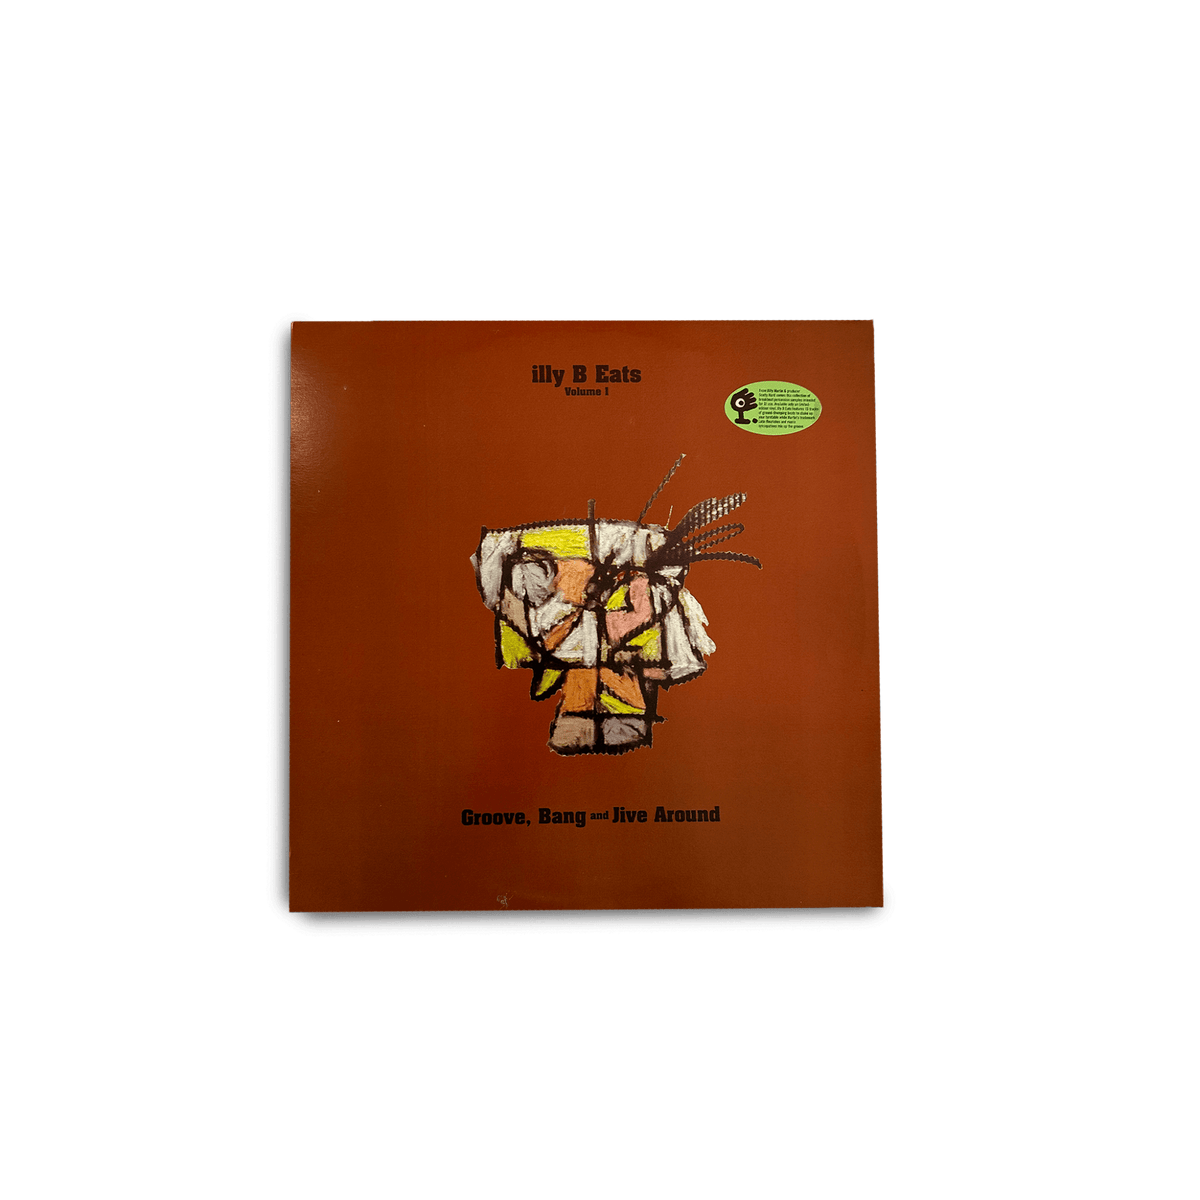 Billy Martin - &#39;ILLY B EATS (Vol. 1) GROOVE, BANG AND JIVE AROUND&#39; Vinyl Record - grown&amp;sewn